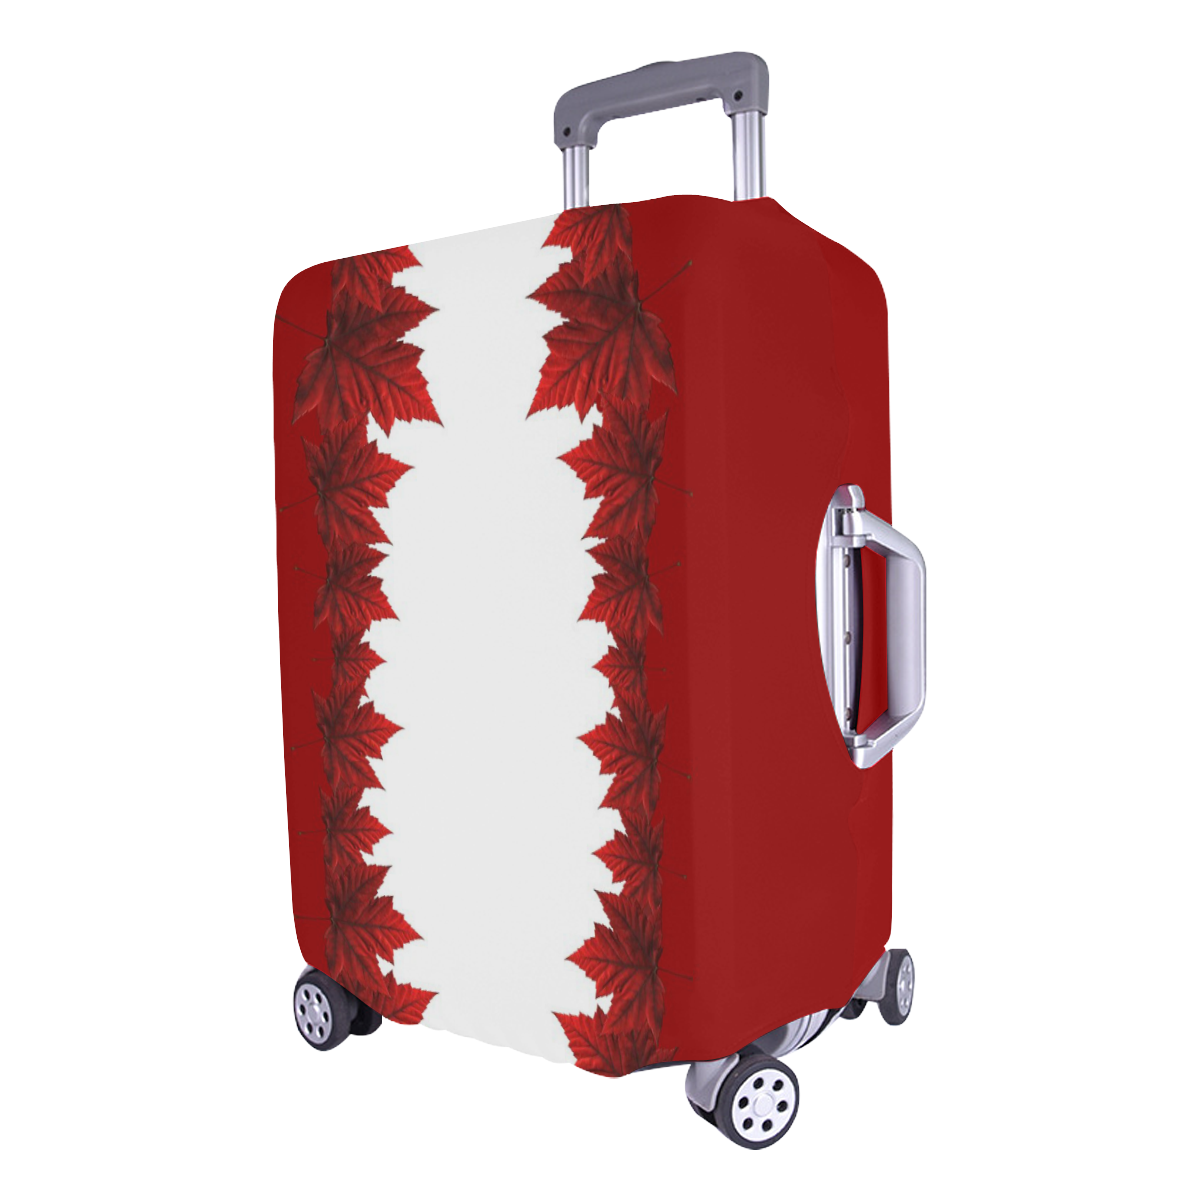 Canada Maple Leaf Luggage Luggage Cover/Large 26"-28"